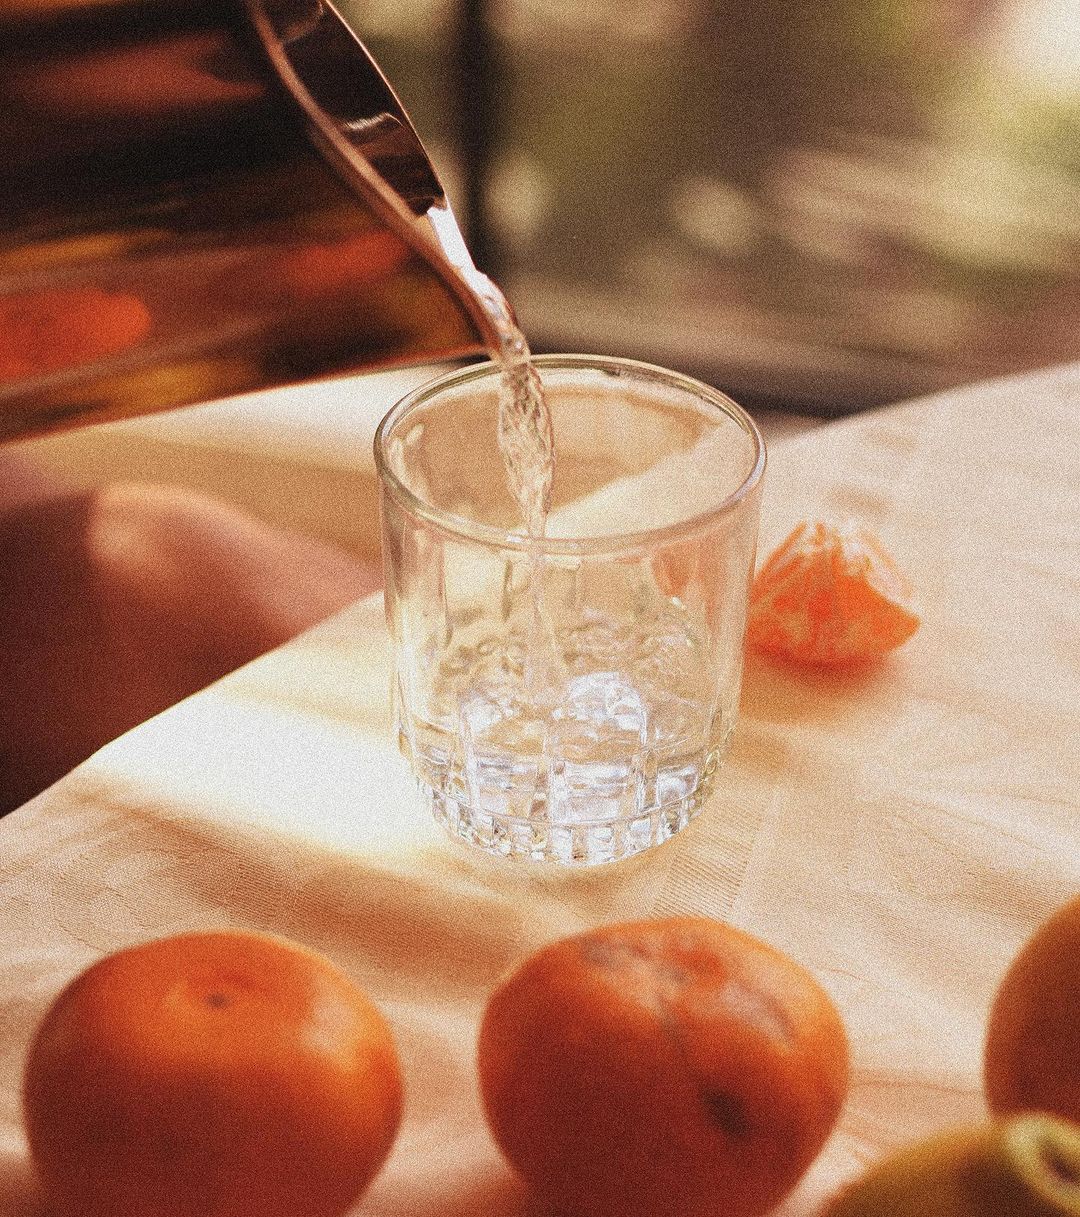 water being poured around oranges